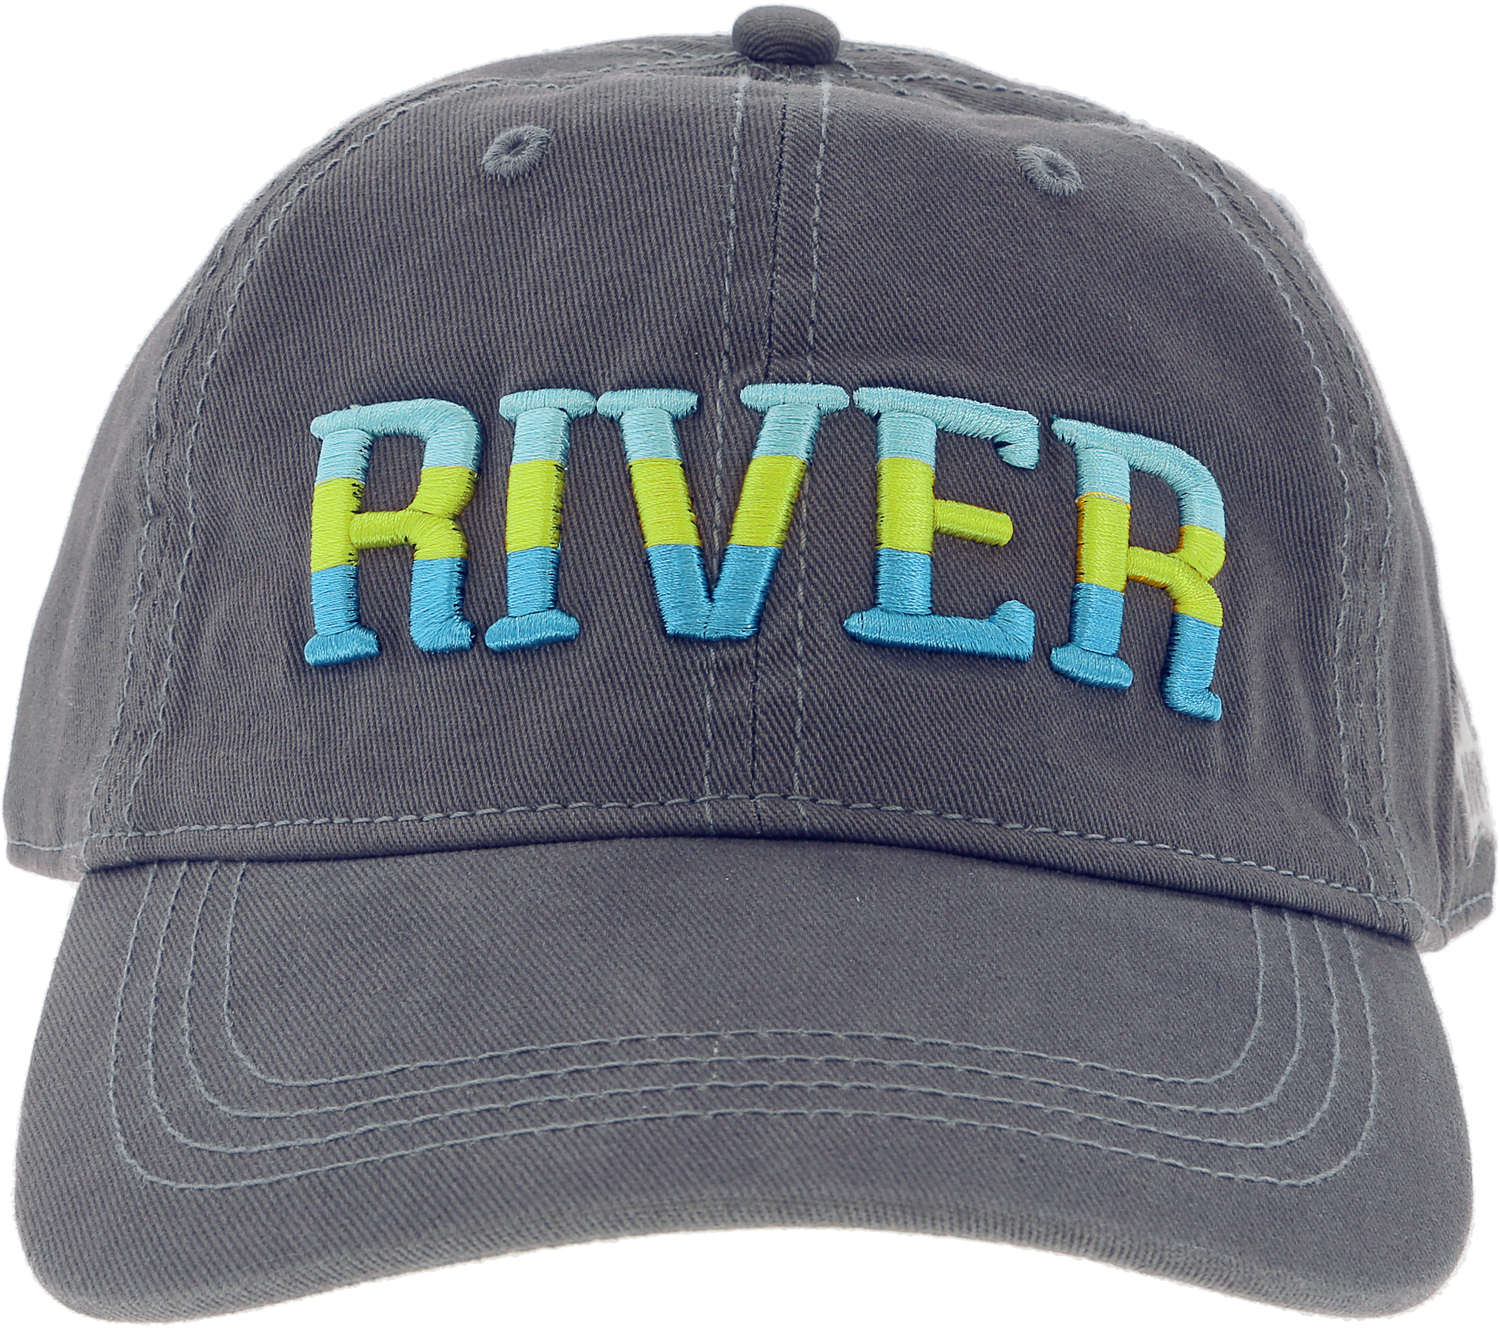 River by We People - River - Dark Gray Adjustable Hat